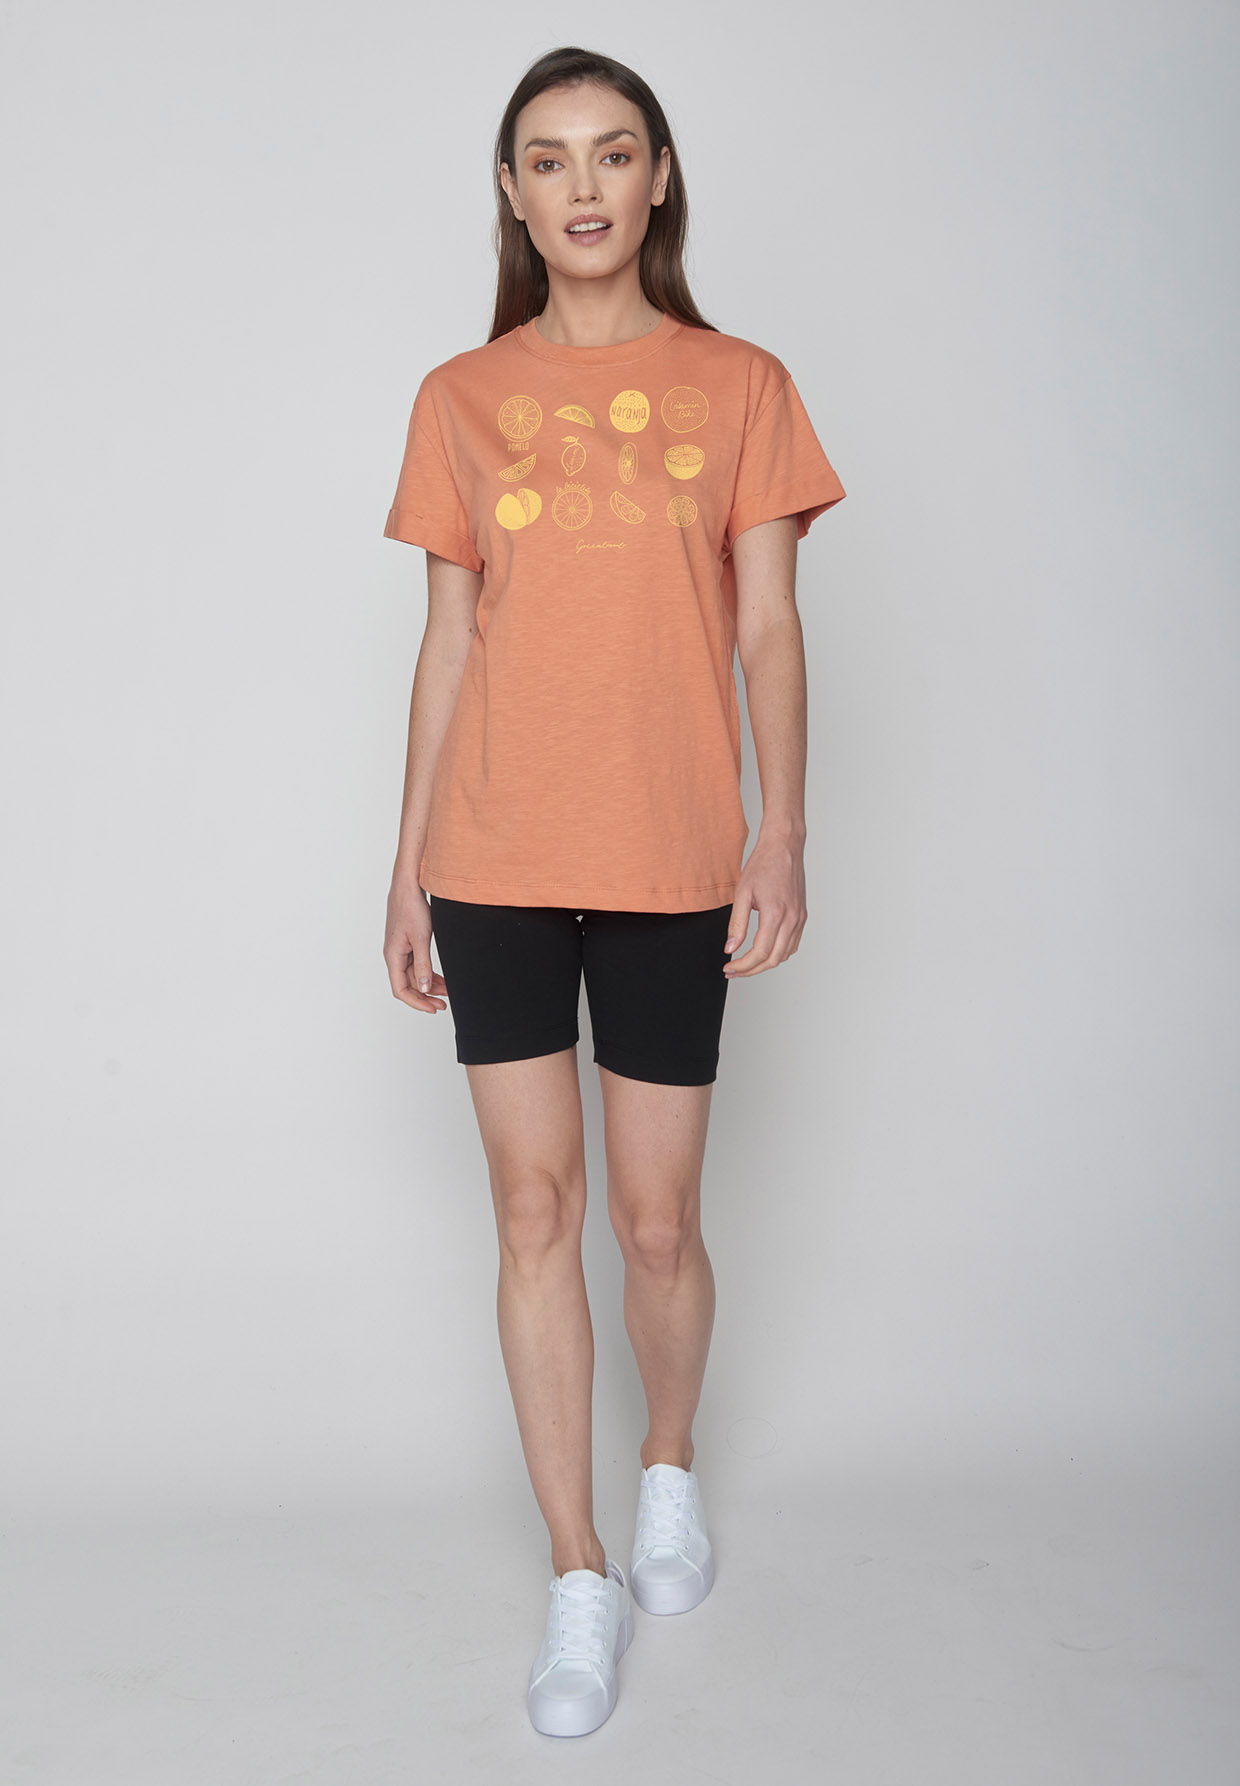 Print T-Shirt Bike Citrus Stop Peach